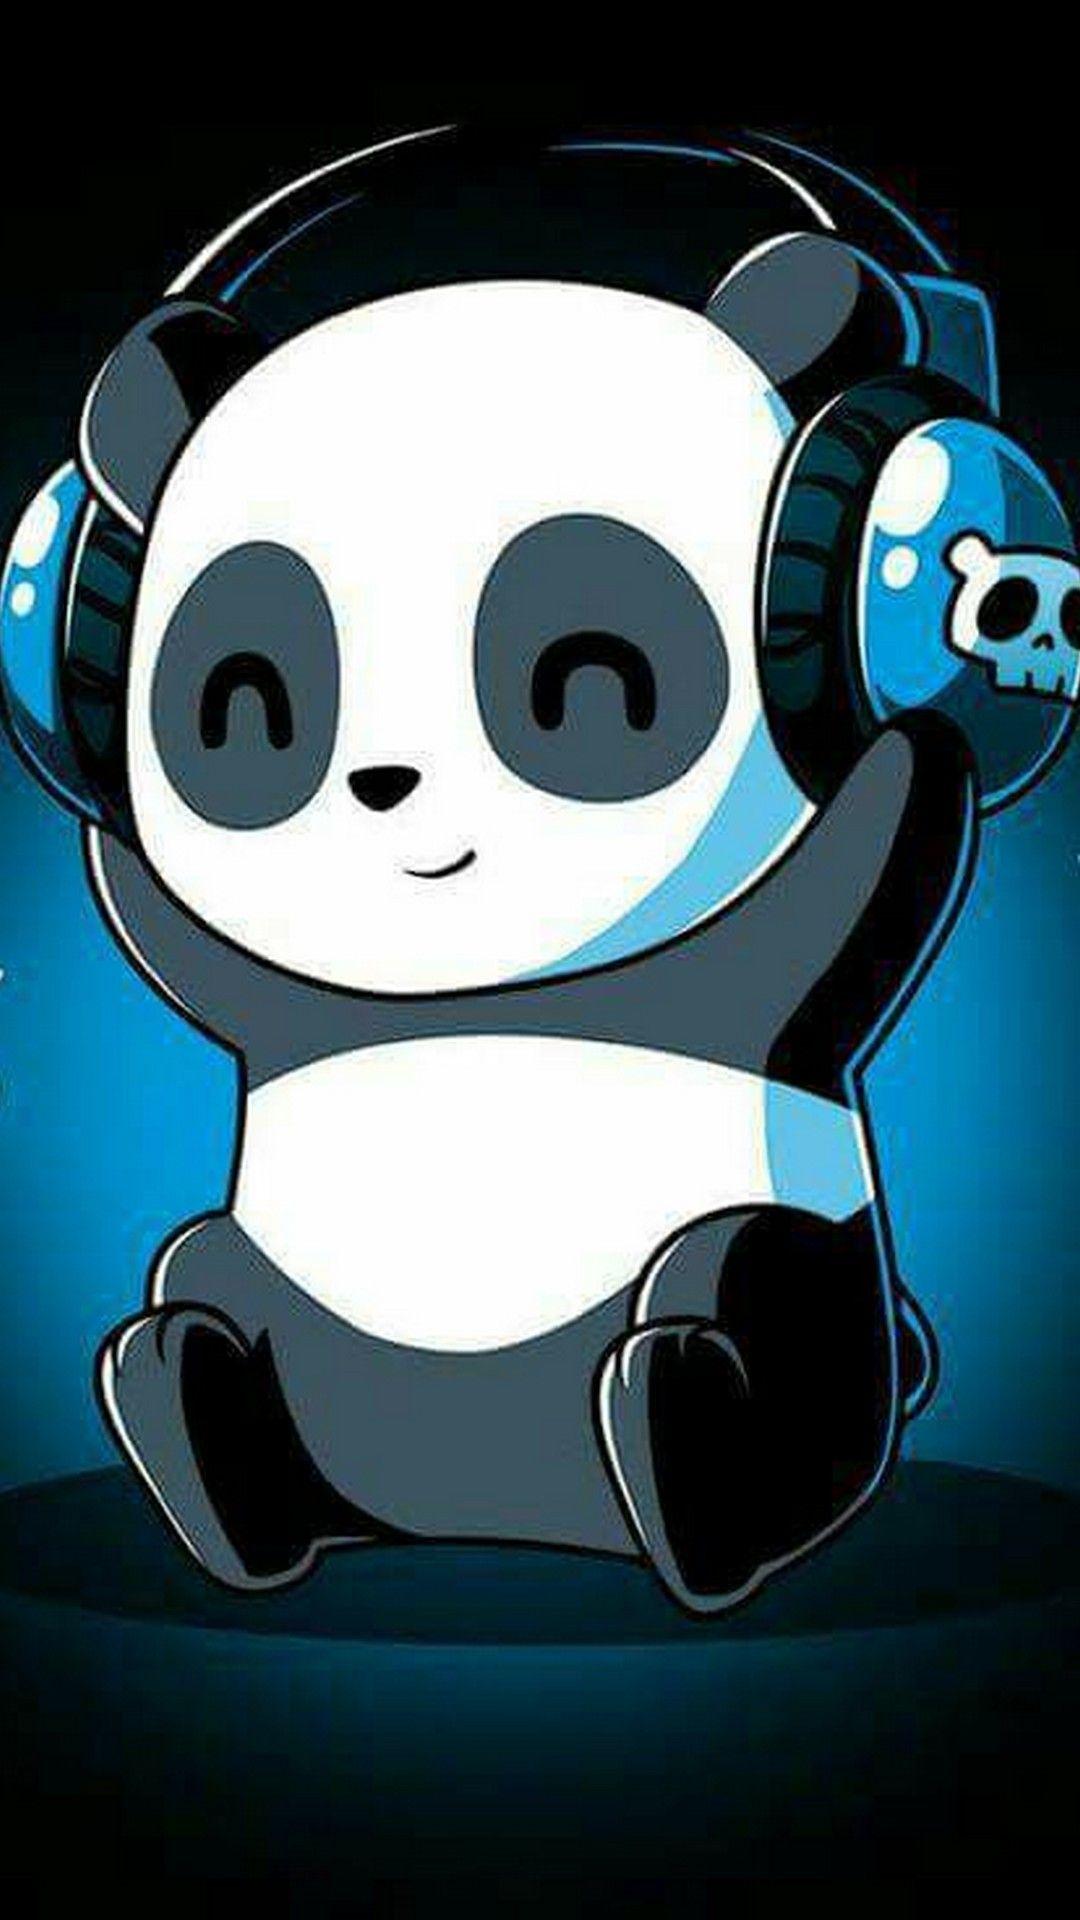 Panda Phone Wallpapers - Top Free Panda Phone Backgrounds - WallpaperAccess